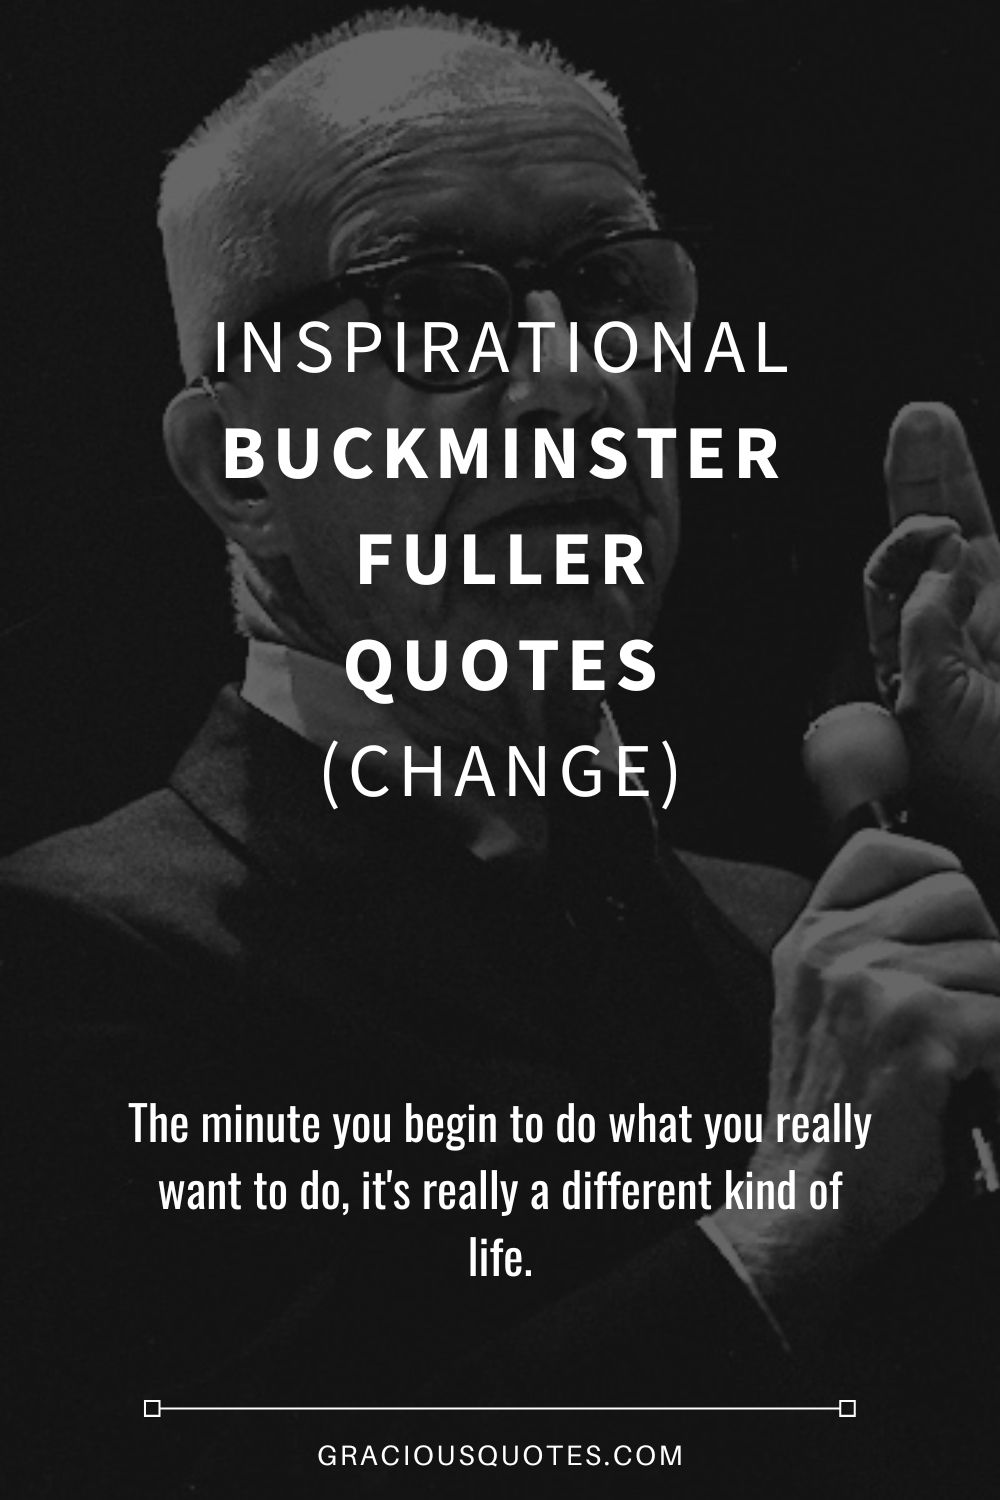 Inspirational Buckminster Fuller Quotes (CHANGE) - Gracious Quotes